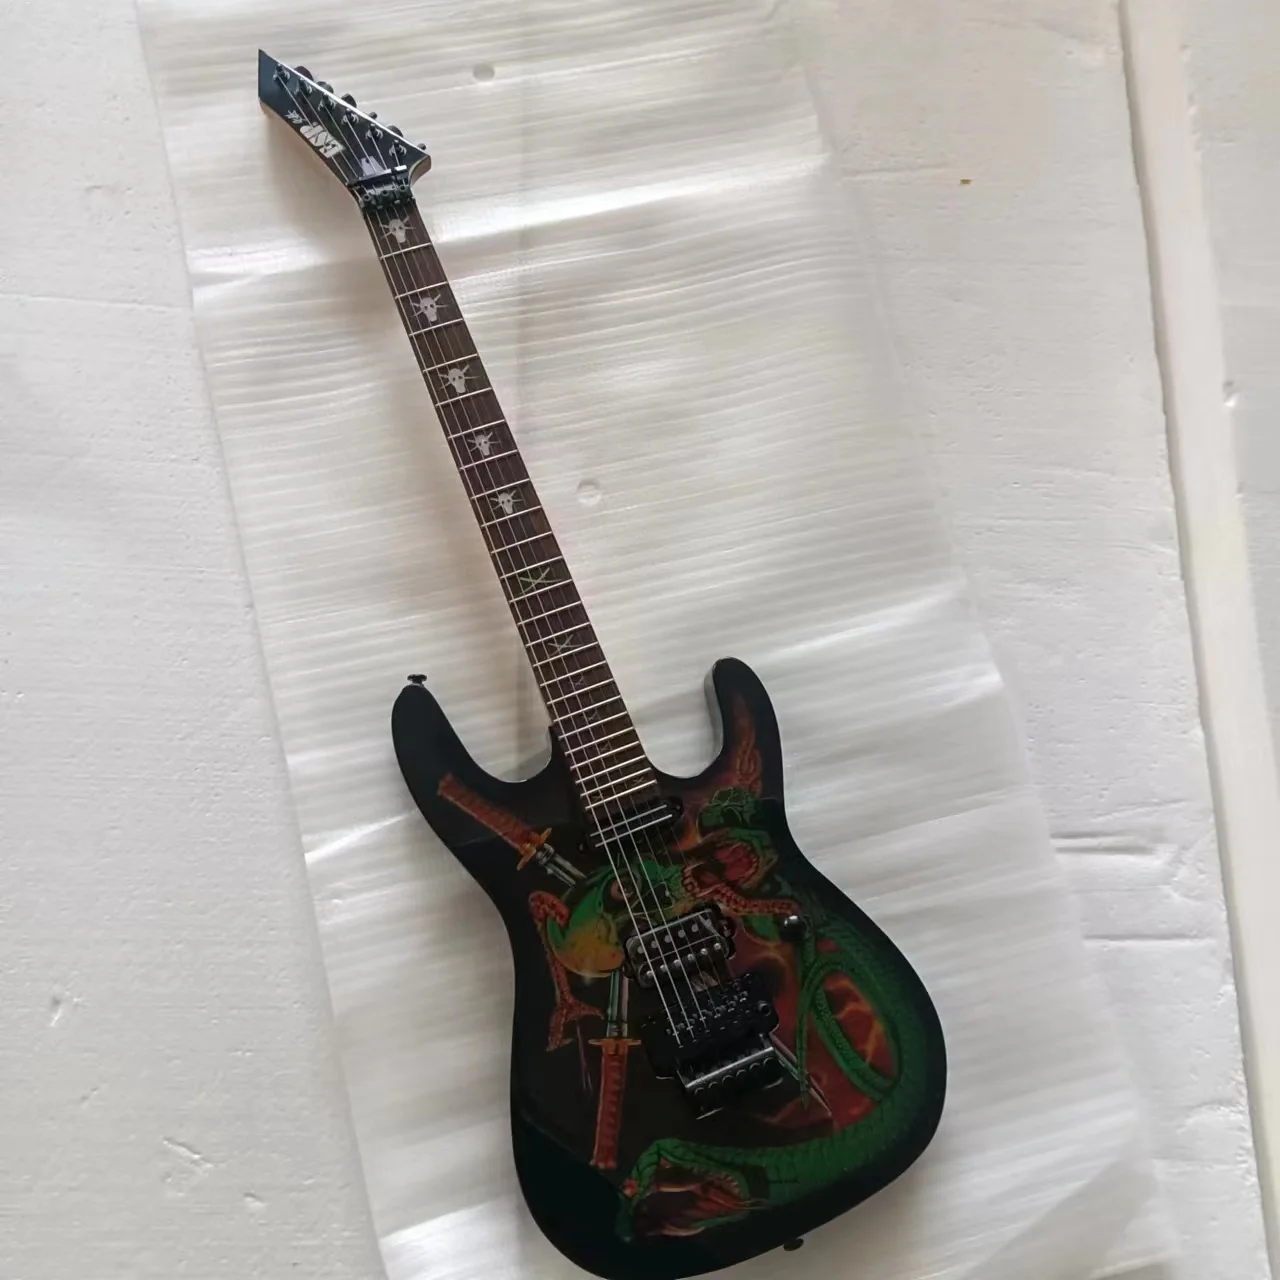 

2022 Custom Shop LTD Skulls Snakes George Lynch Signature Electric Guitar Floyd Rose Tremolo Bridge, Locking Nut, Black Hardware